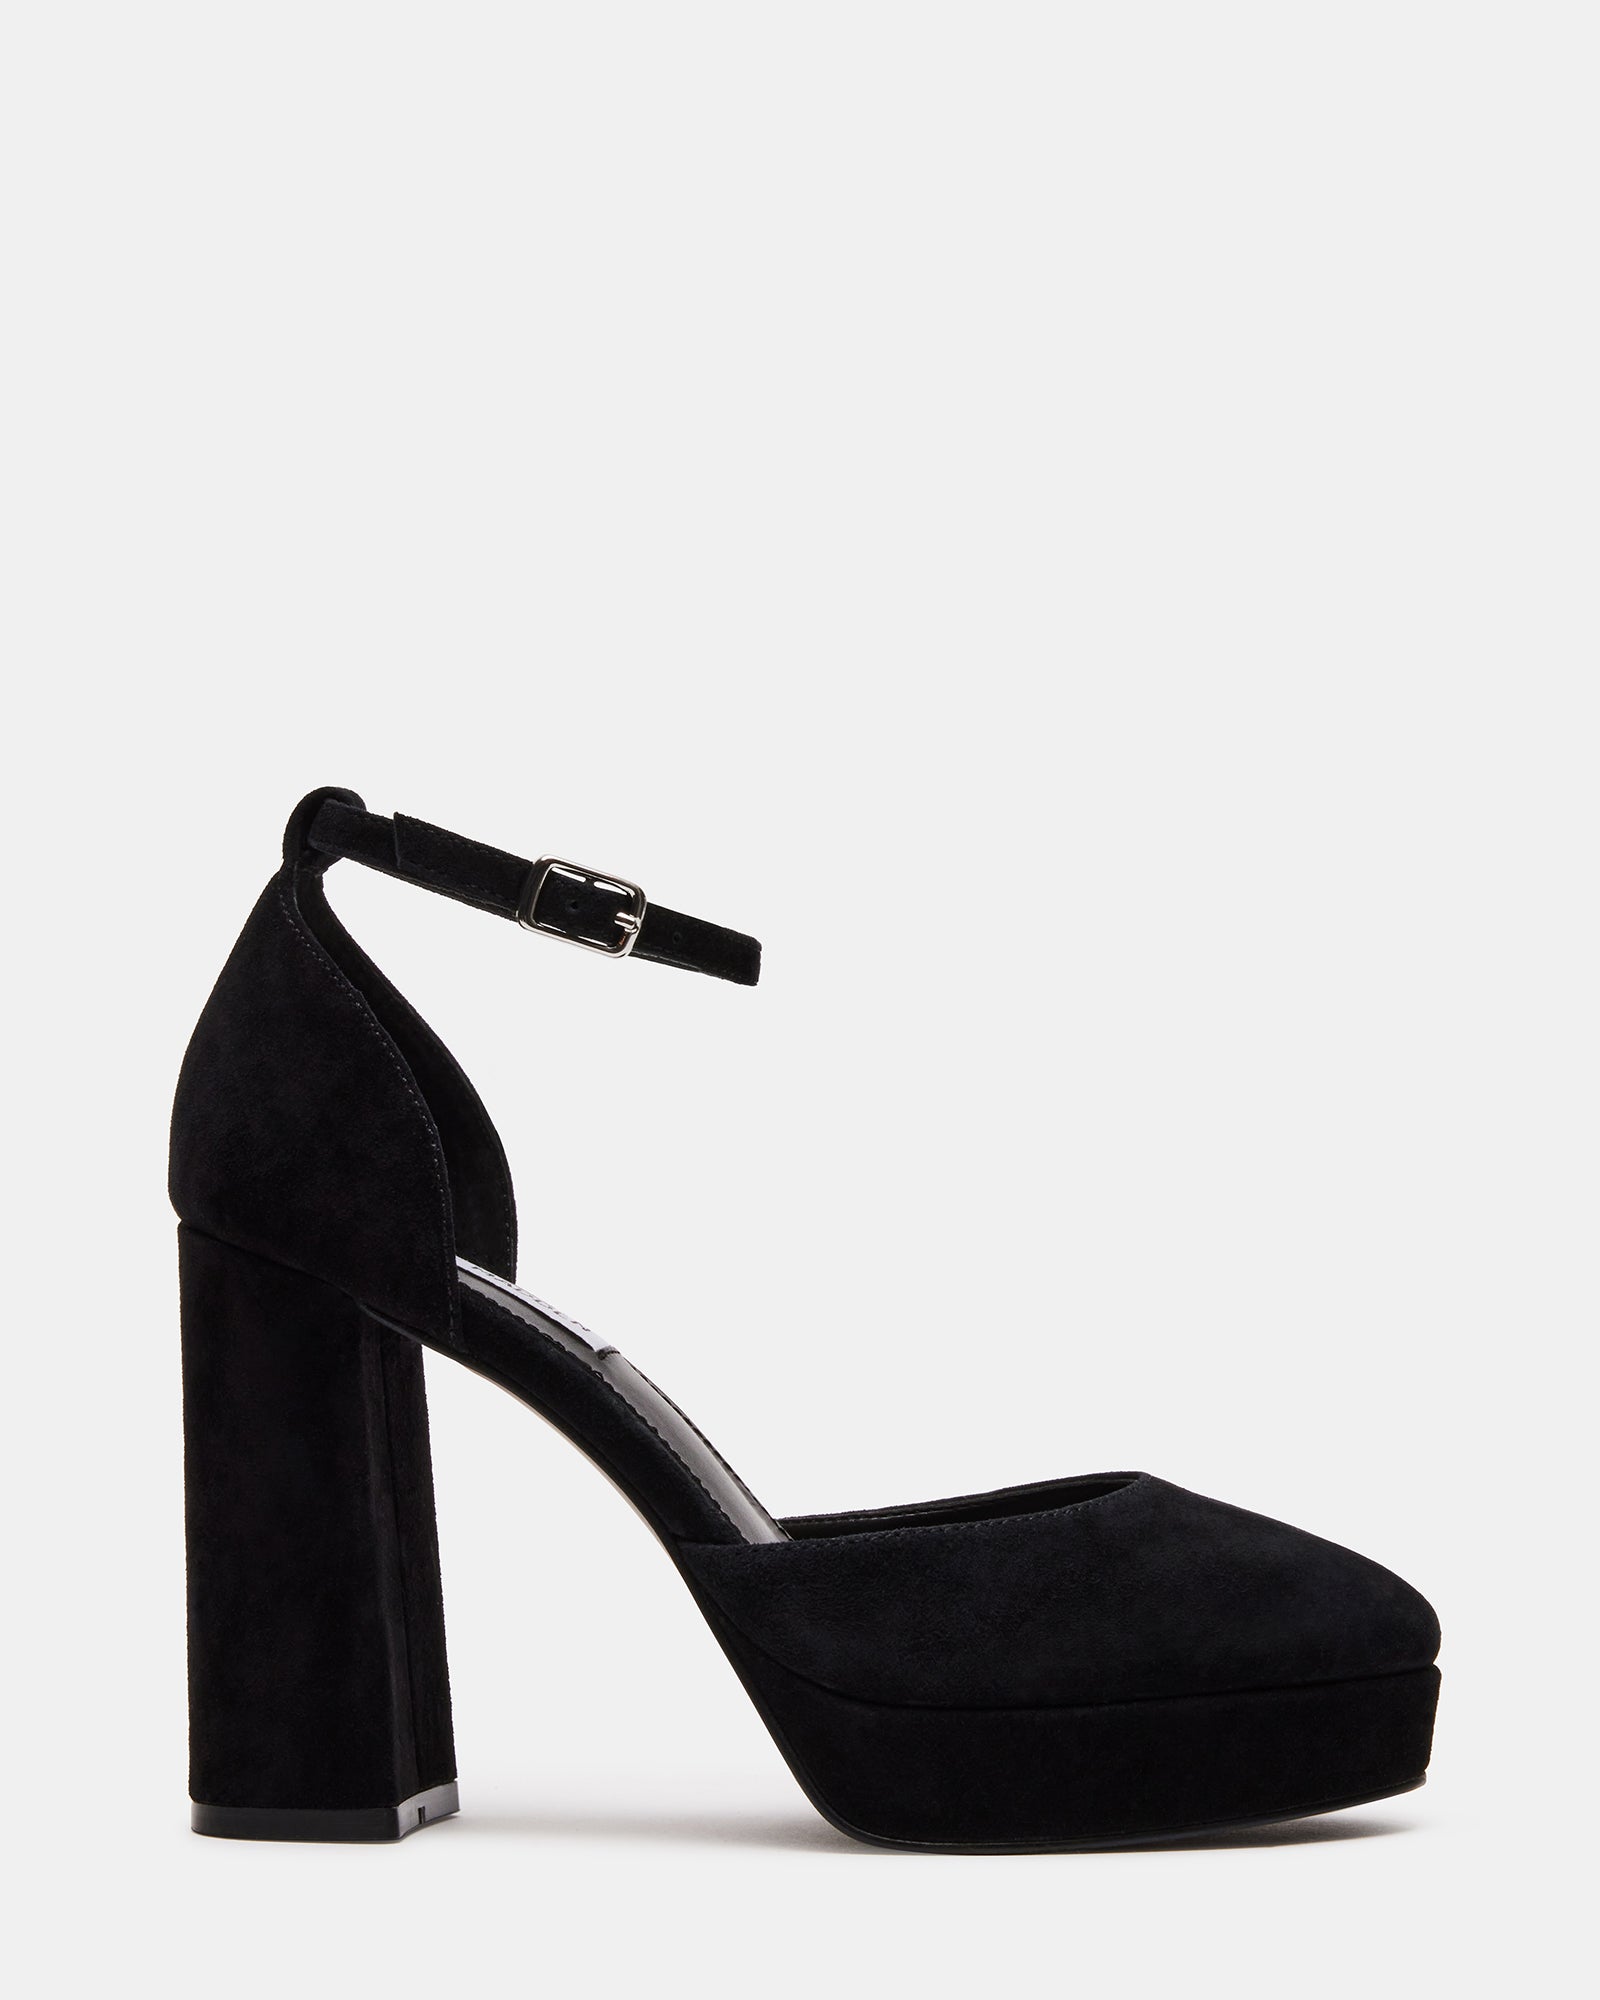 Truth Black Suede Women's Heels | Size 11 | by Steve Madden